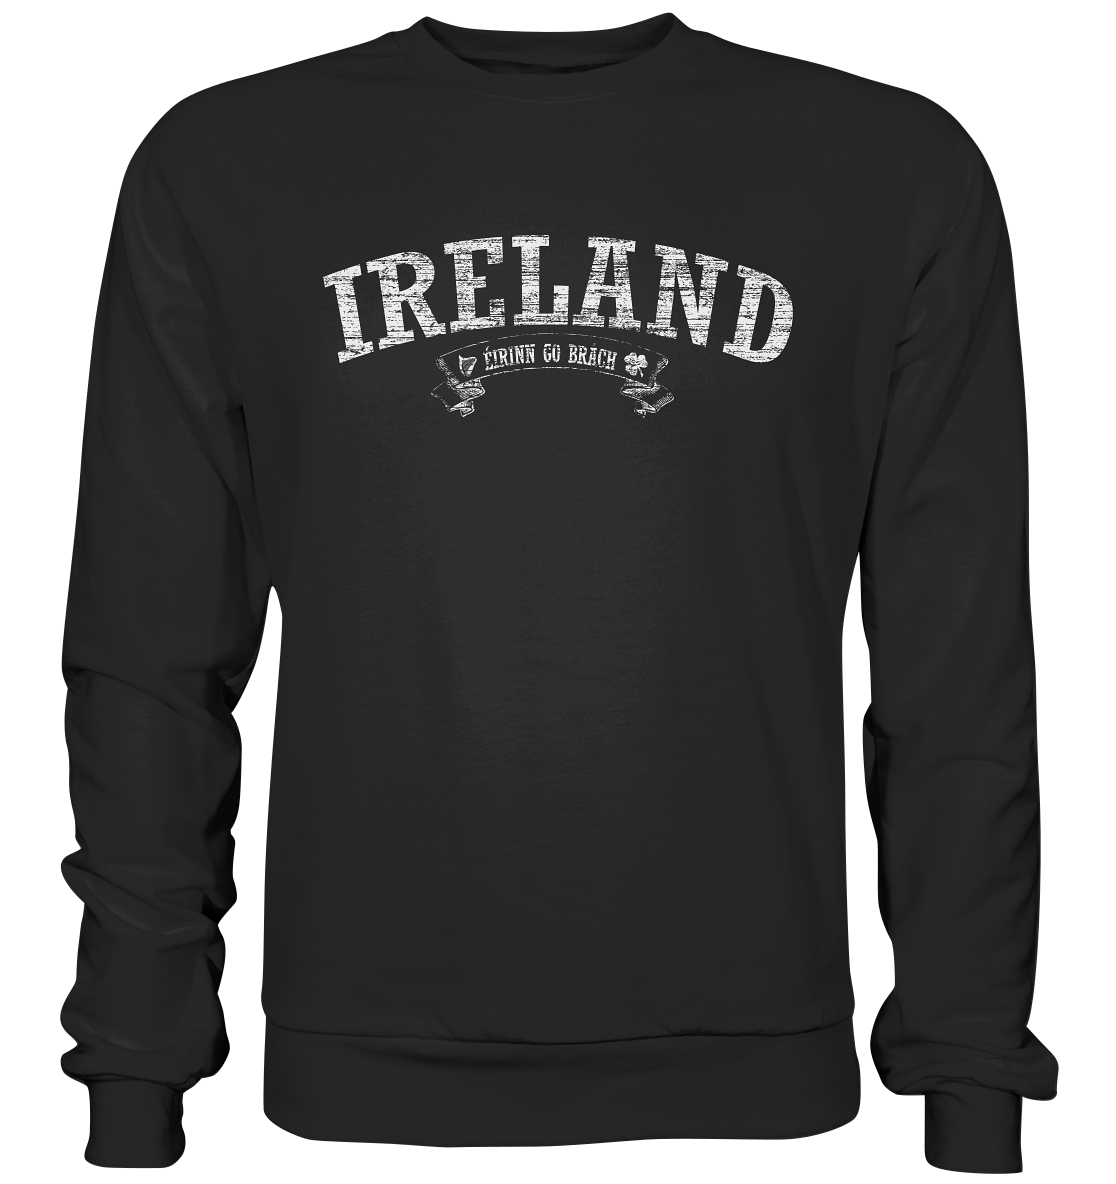 "Ireland - Éirinn go brách" - Premium Sweatshirt